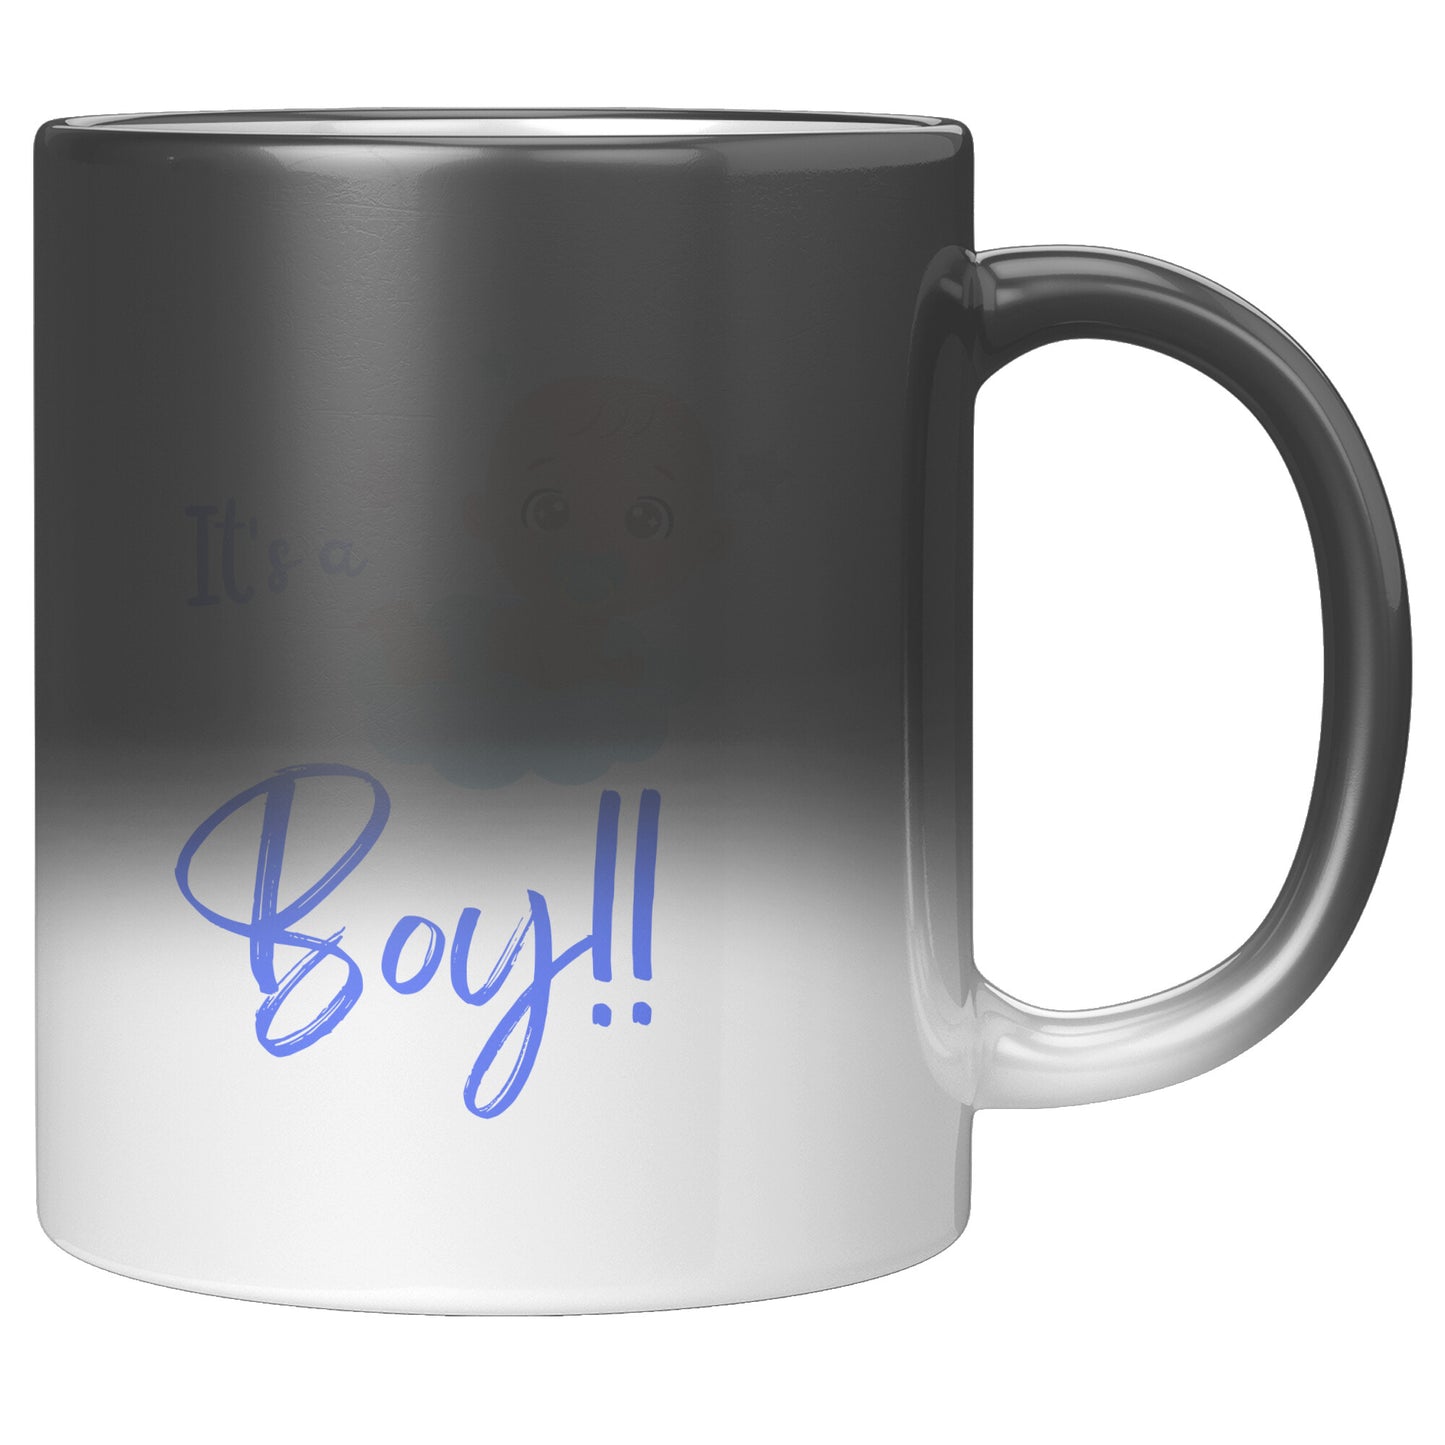 “It’s a Boy” Coffee Mug •  “Magic” Gender Reveal Mug 🍼 Gender Reveal Coffee Mug